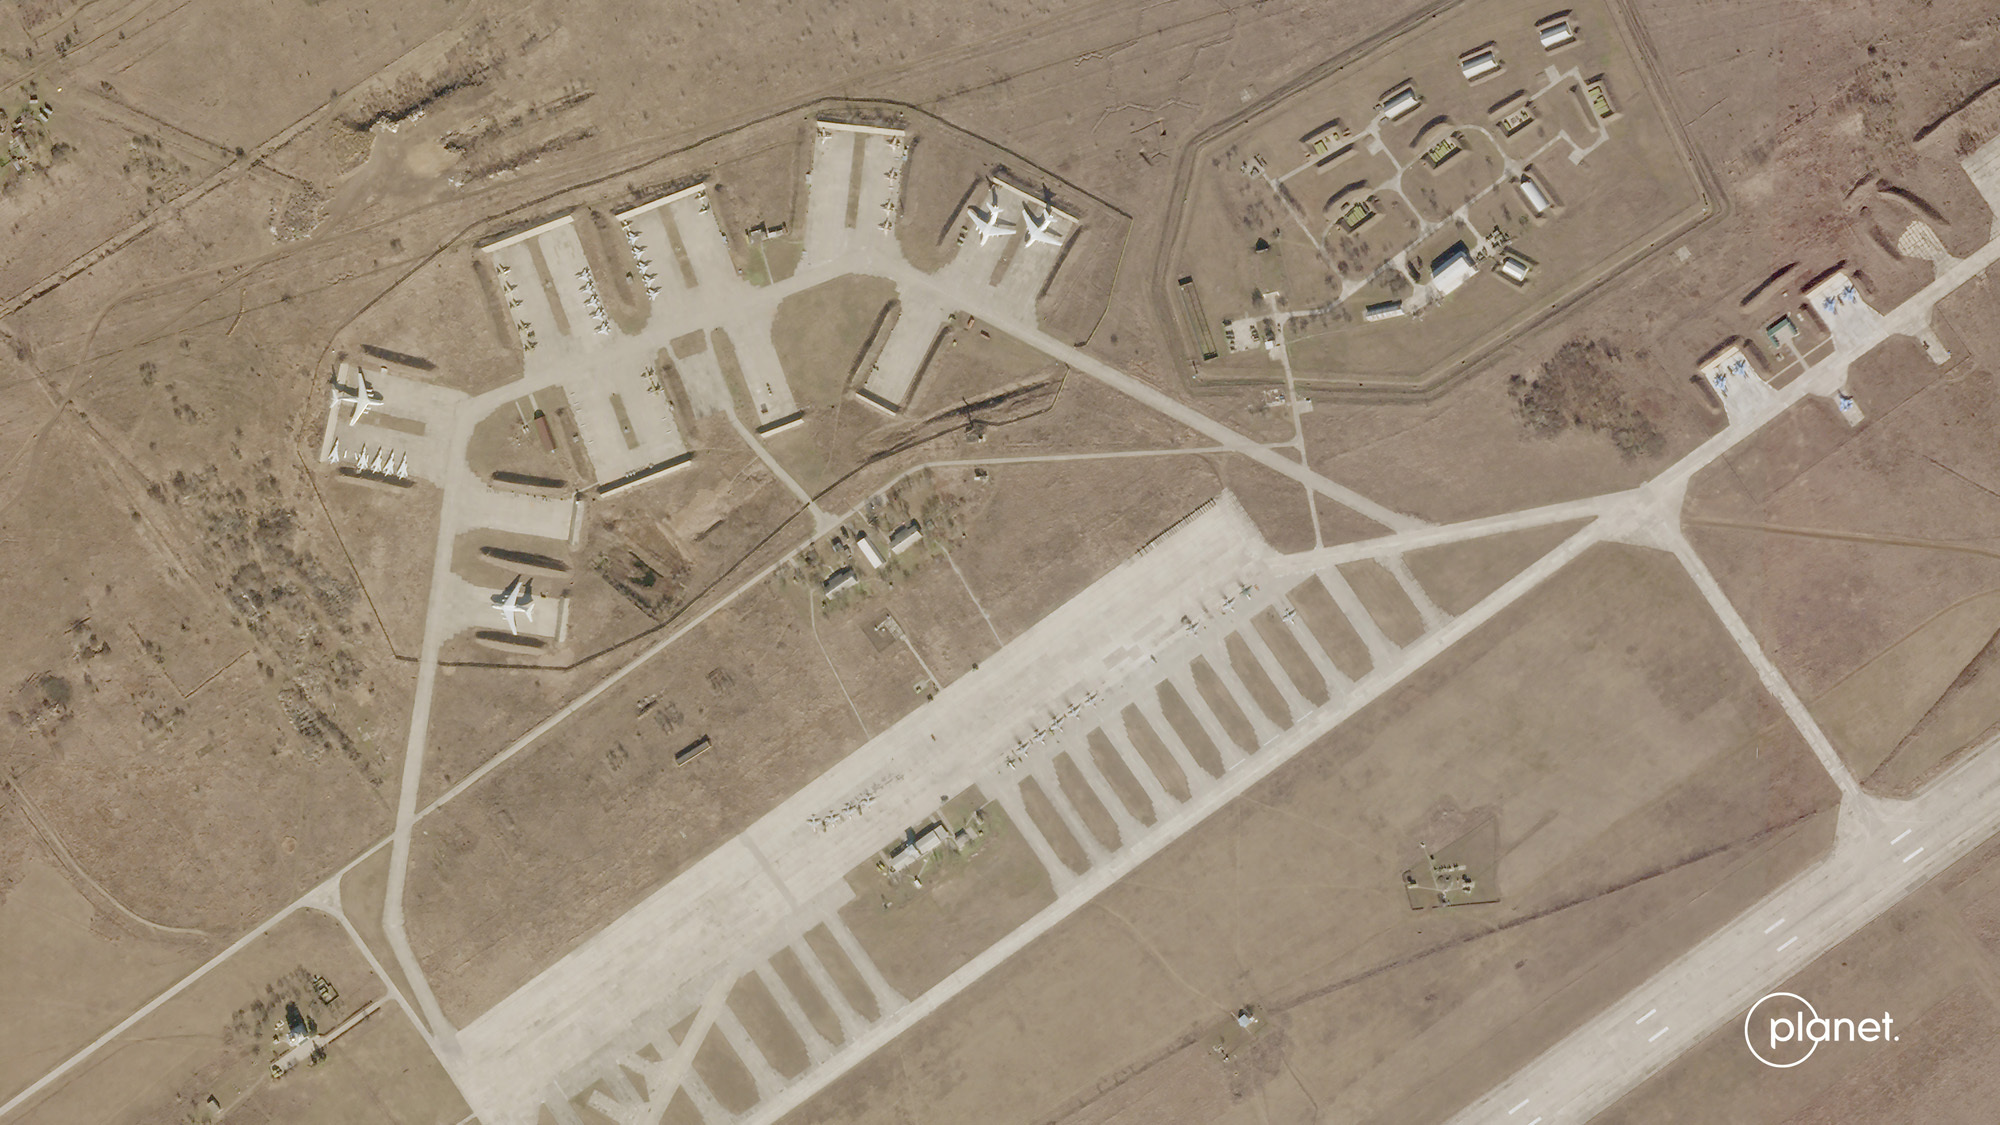 The Mikolaiv Airbase in Ukiraine on Feb. 21, 2022.